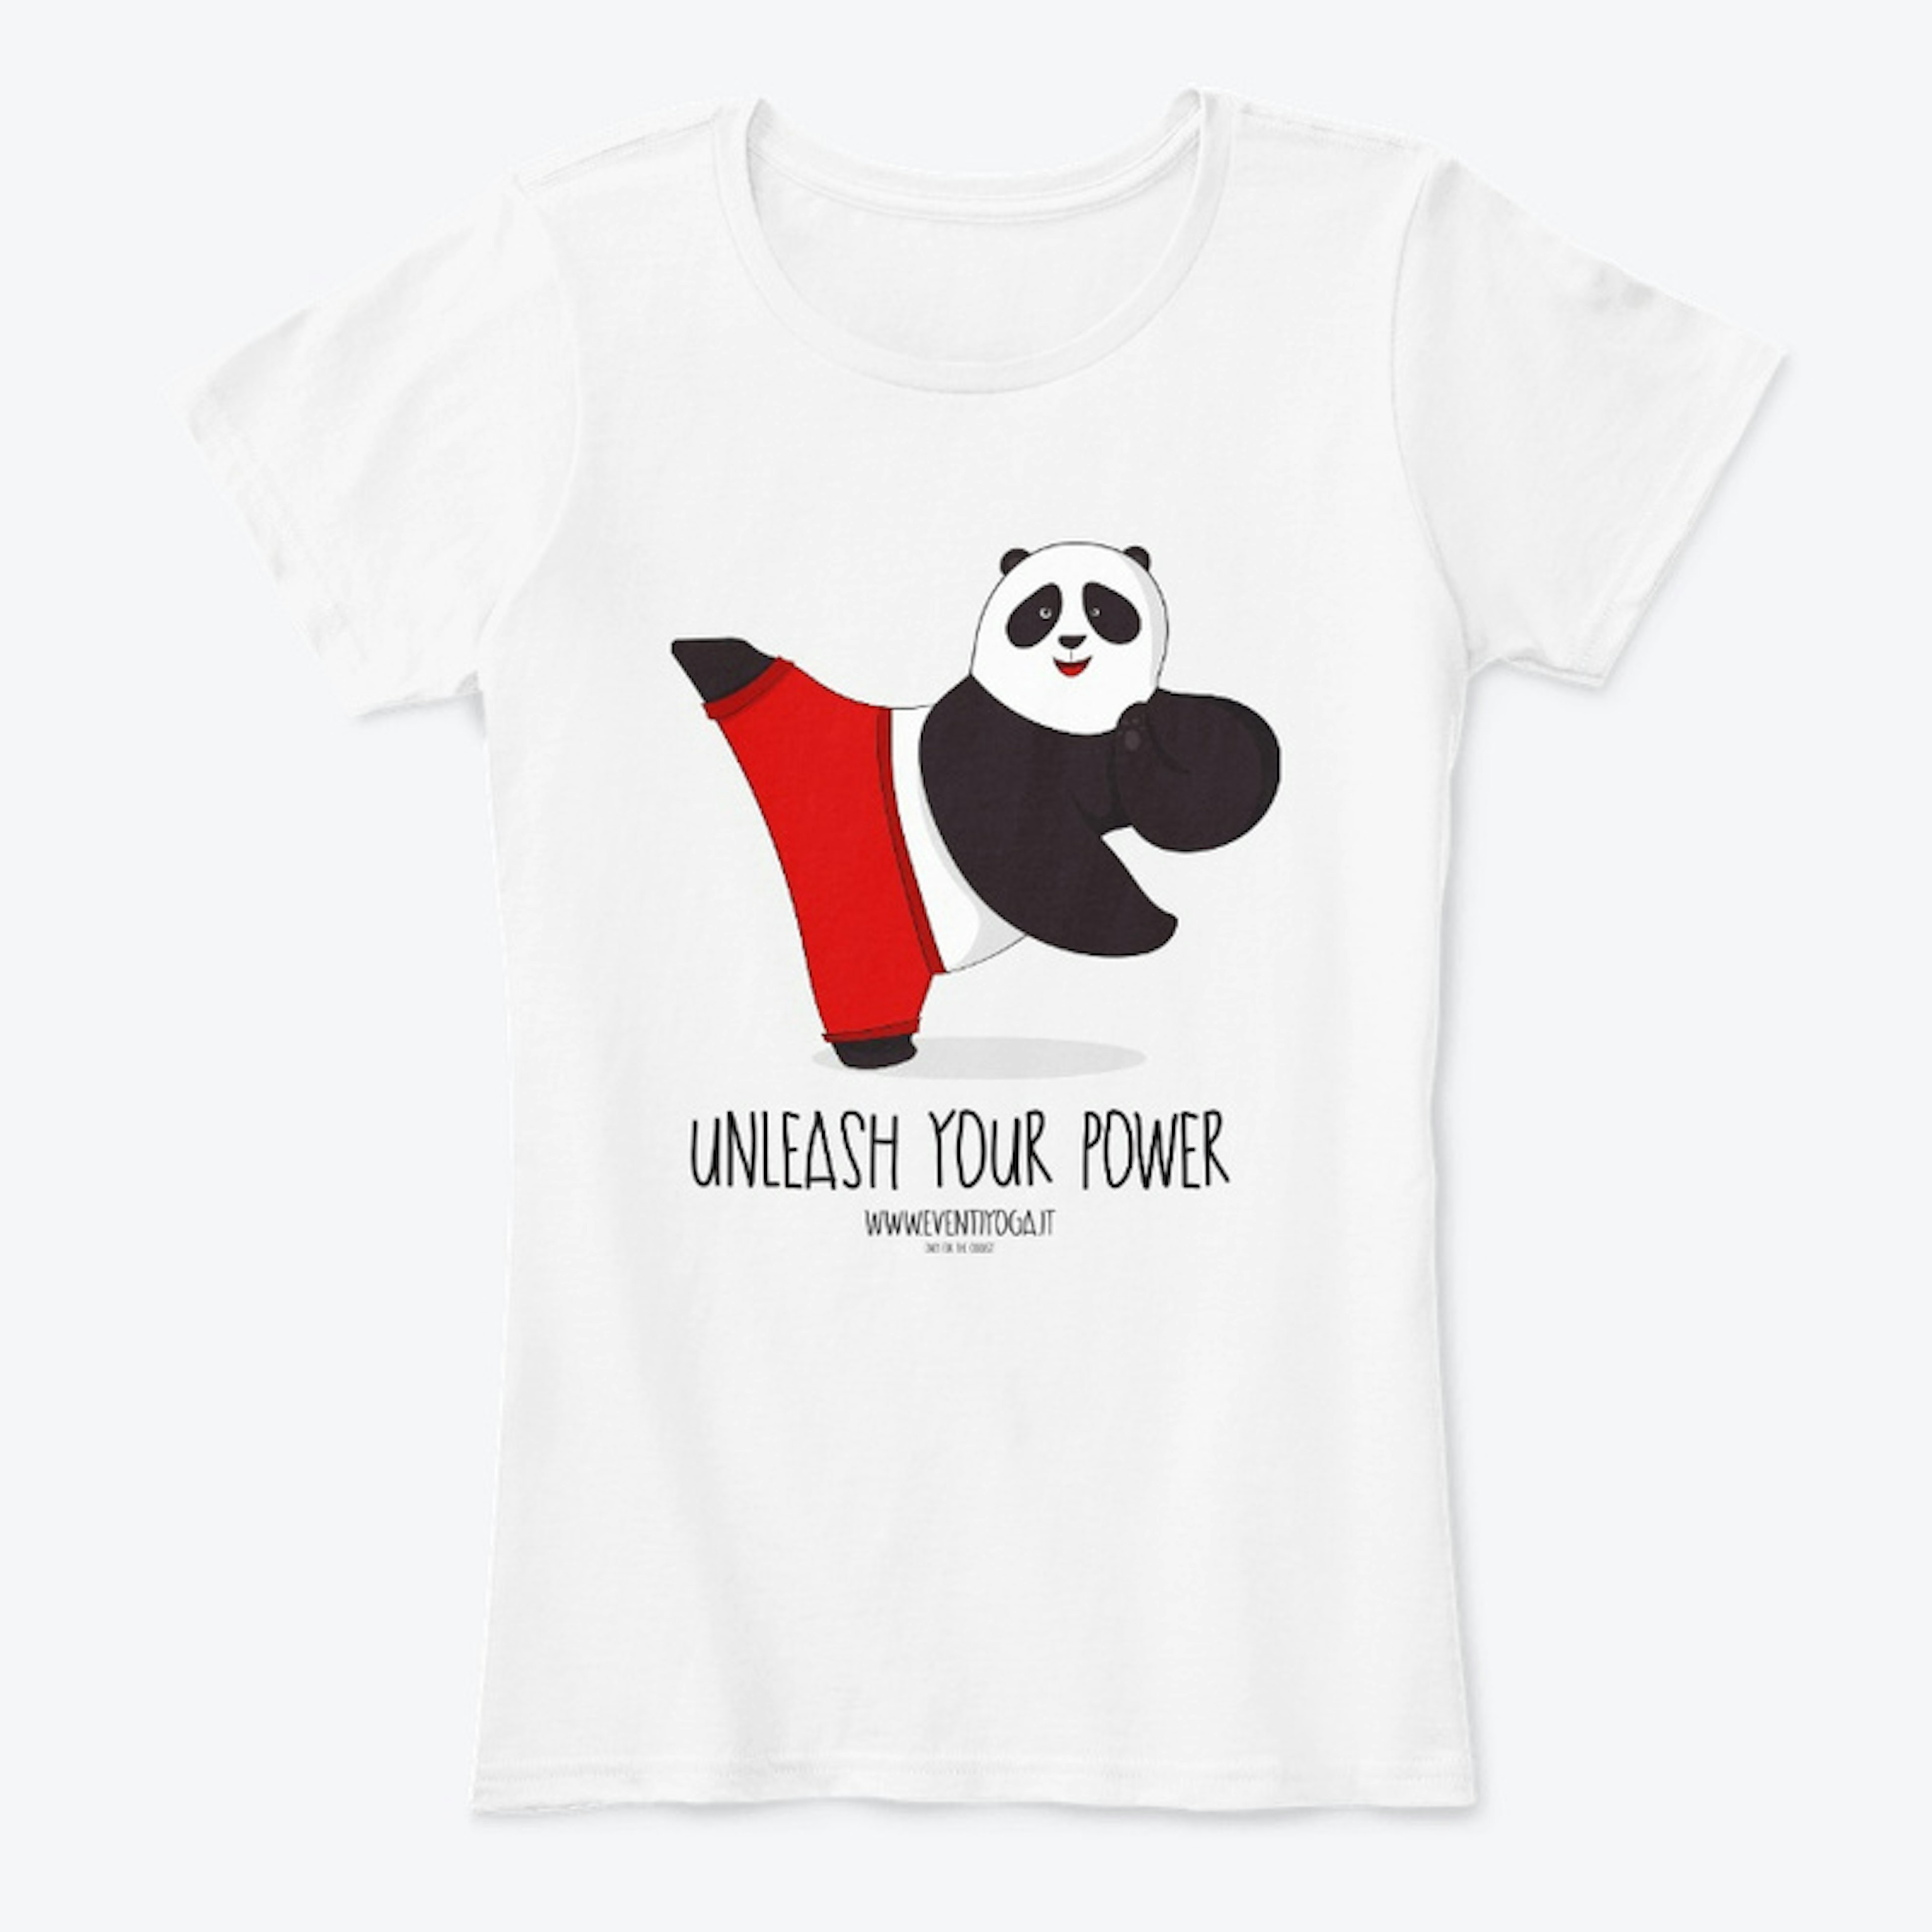 Women's T-shirt: "UNLEASH YOUR POWER"